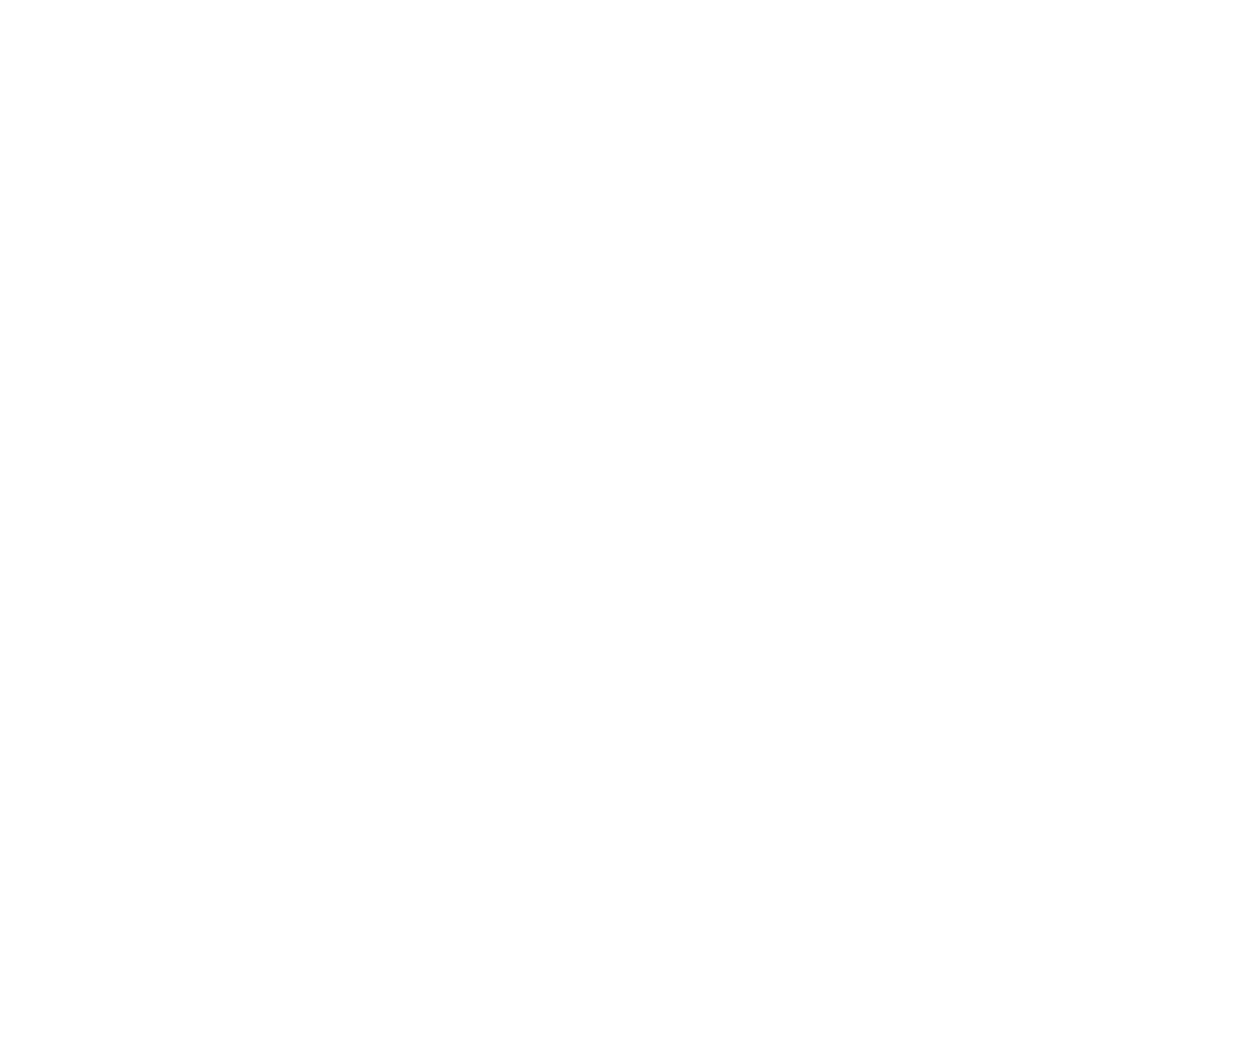 PNW by No Dinx